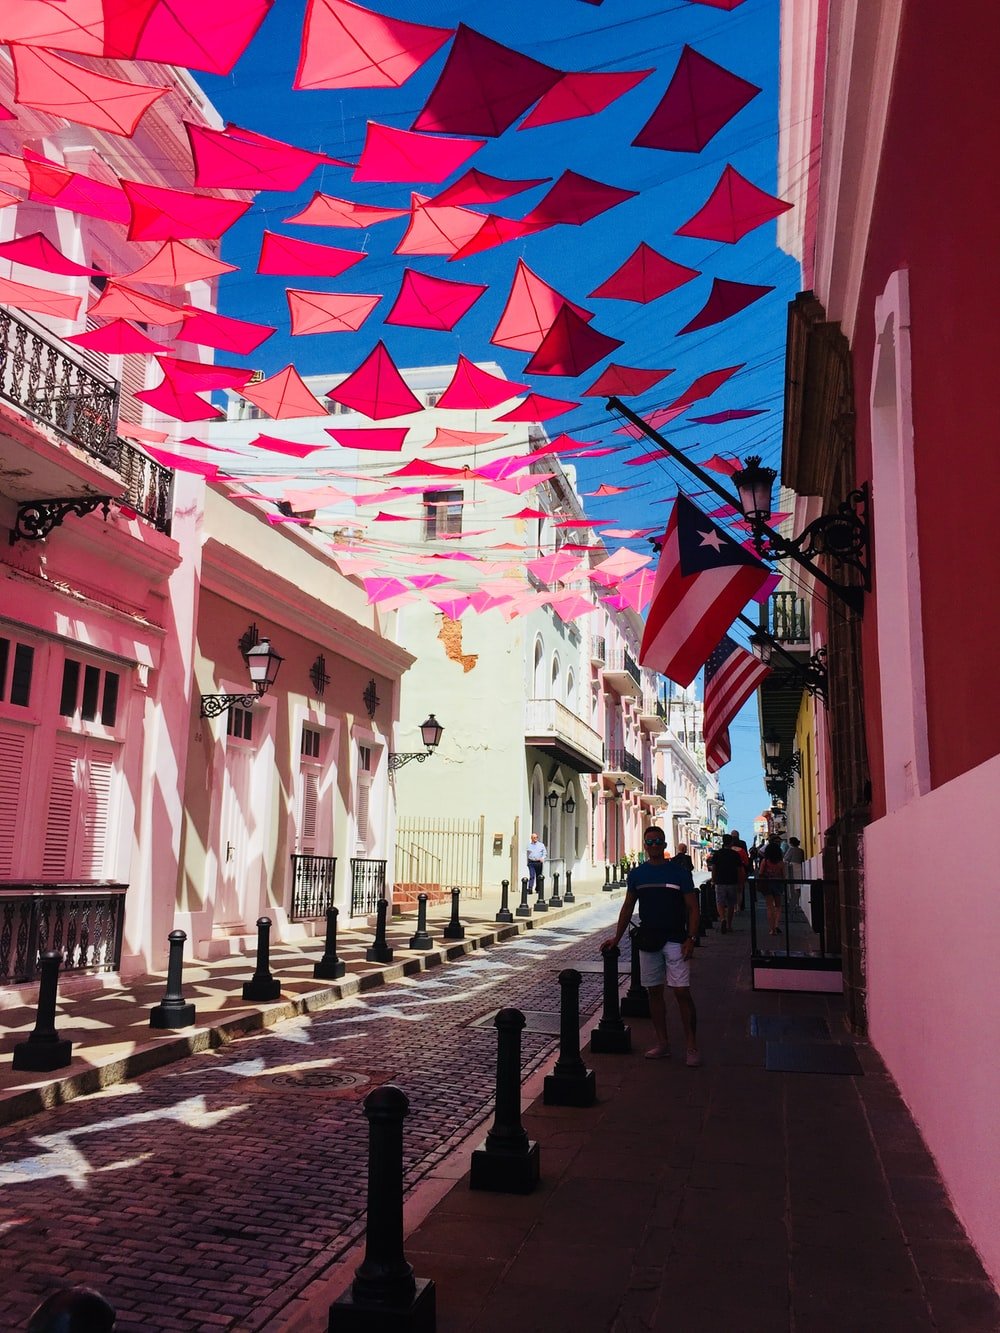 Old San Juan Picture. Download Free Image